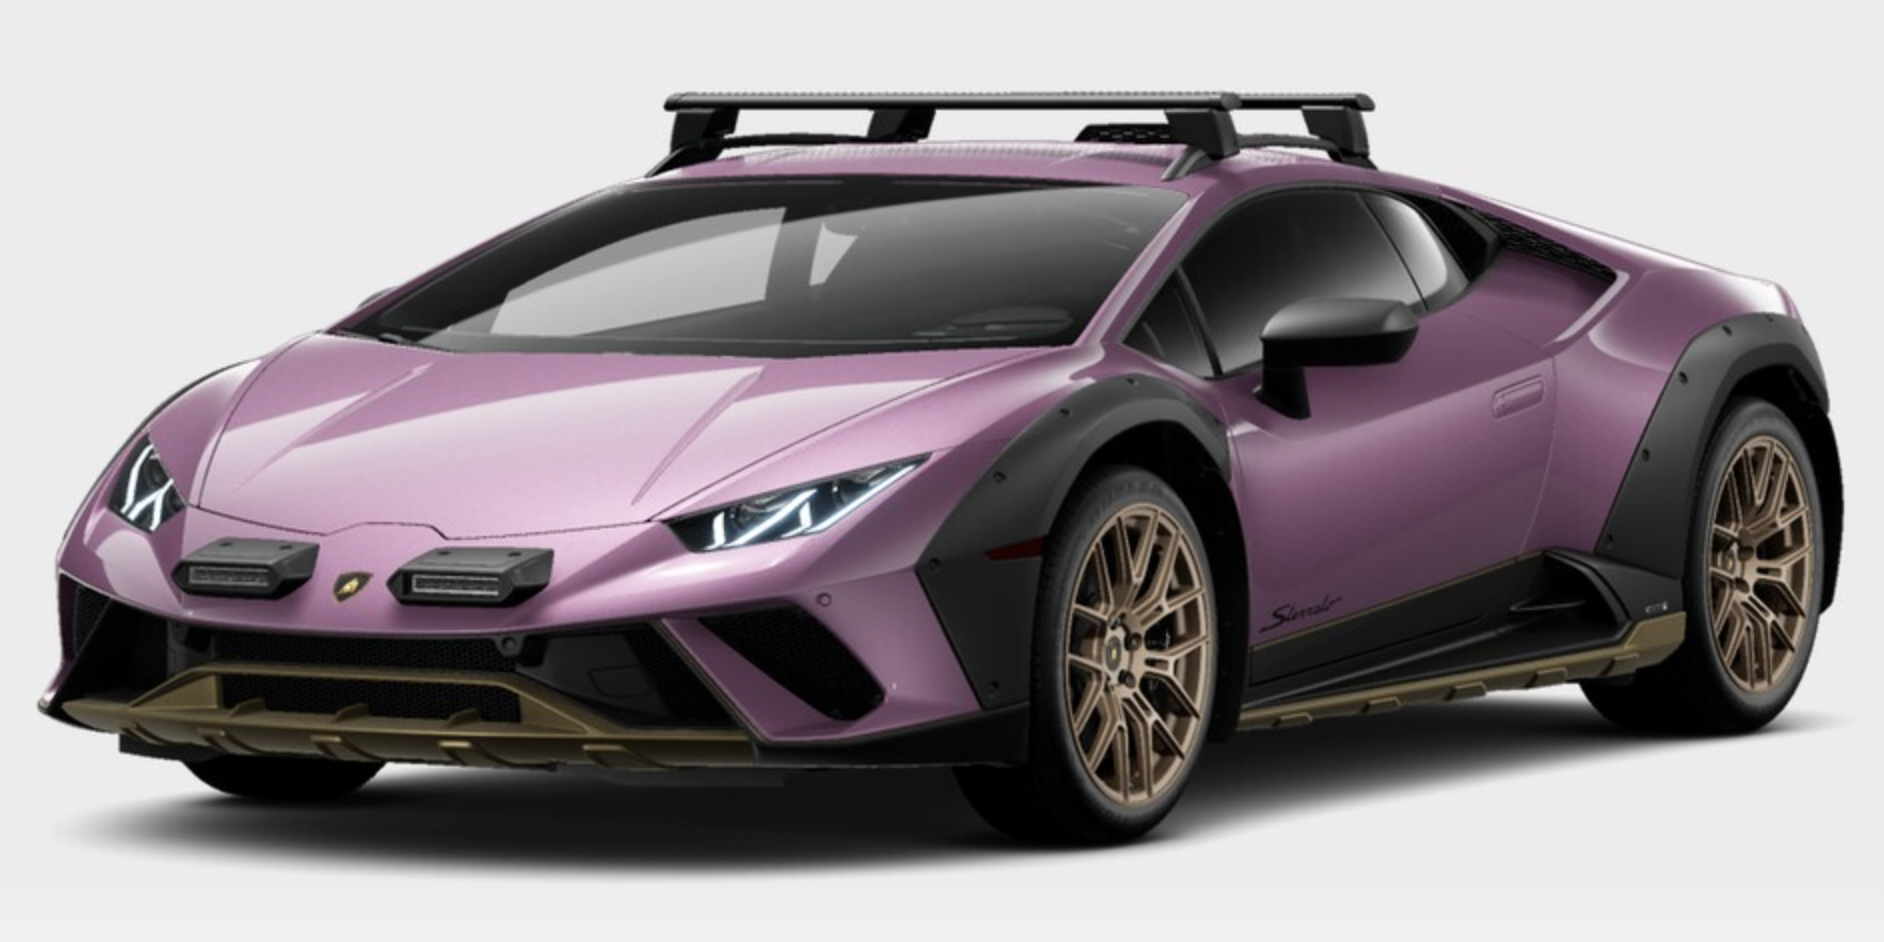 How Will You Configure Your Off-Road Lamborghini?